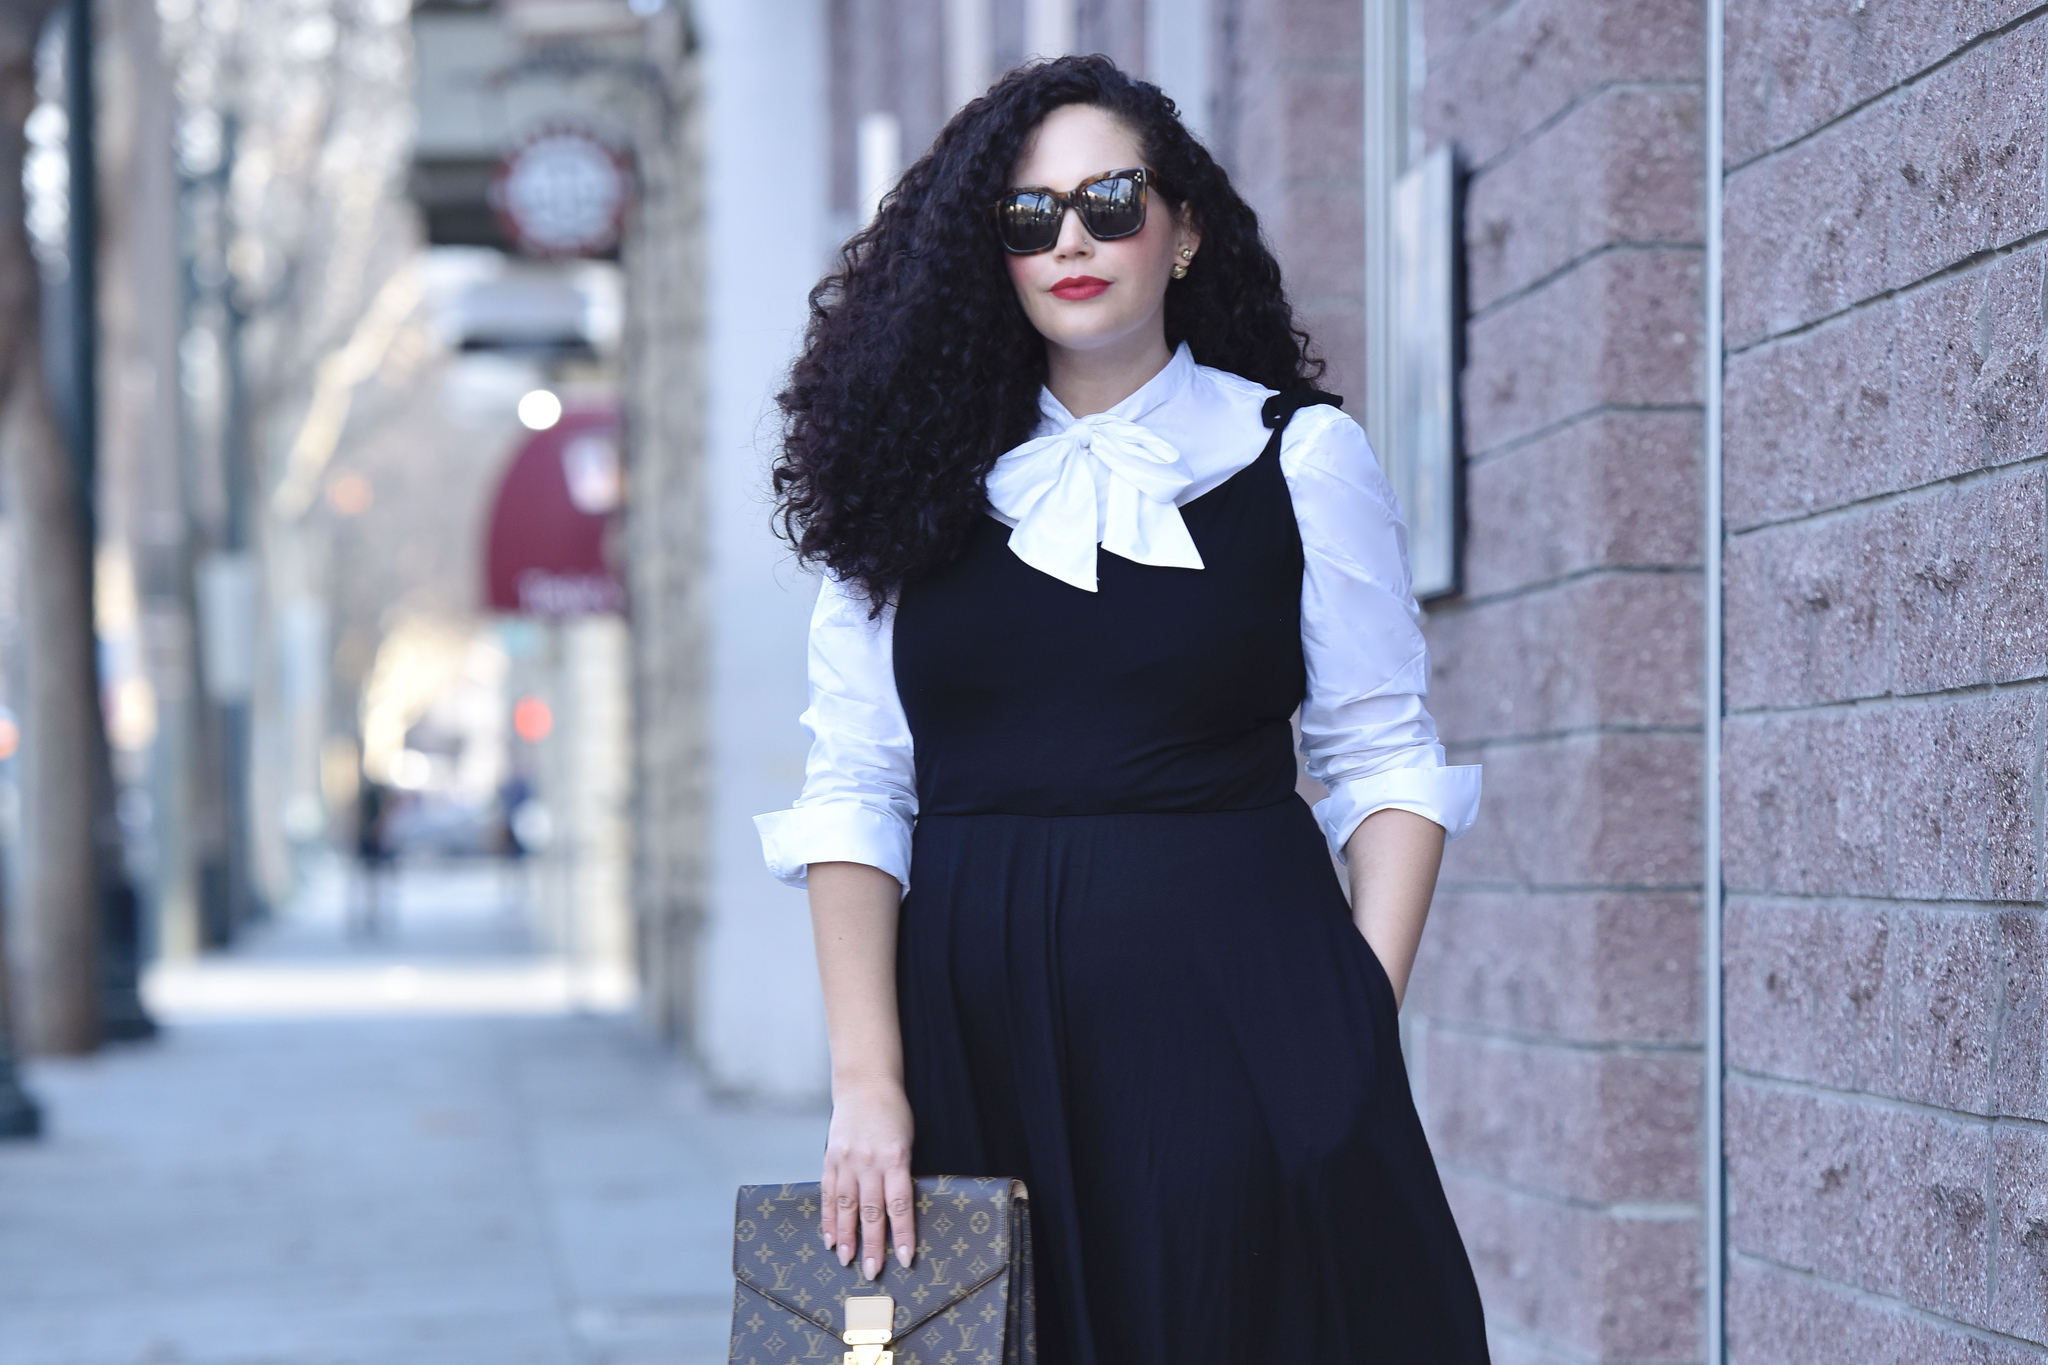 The Modest Fashion Hack I’m Loving Right Now Via @GirlWithCurves #dress #black #spring #white #shirt.